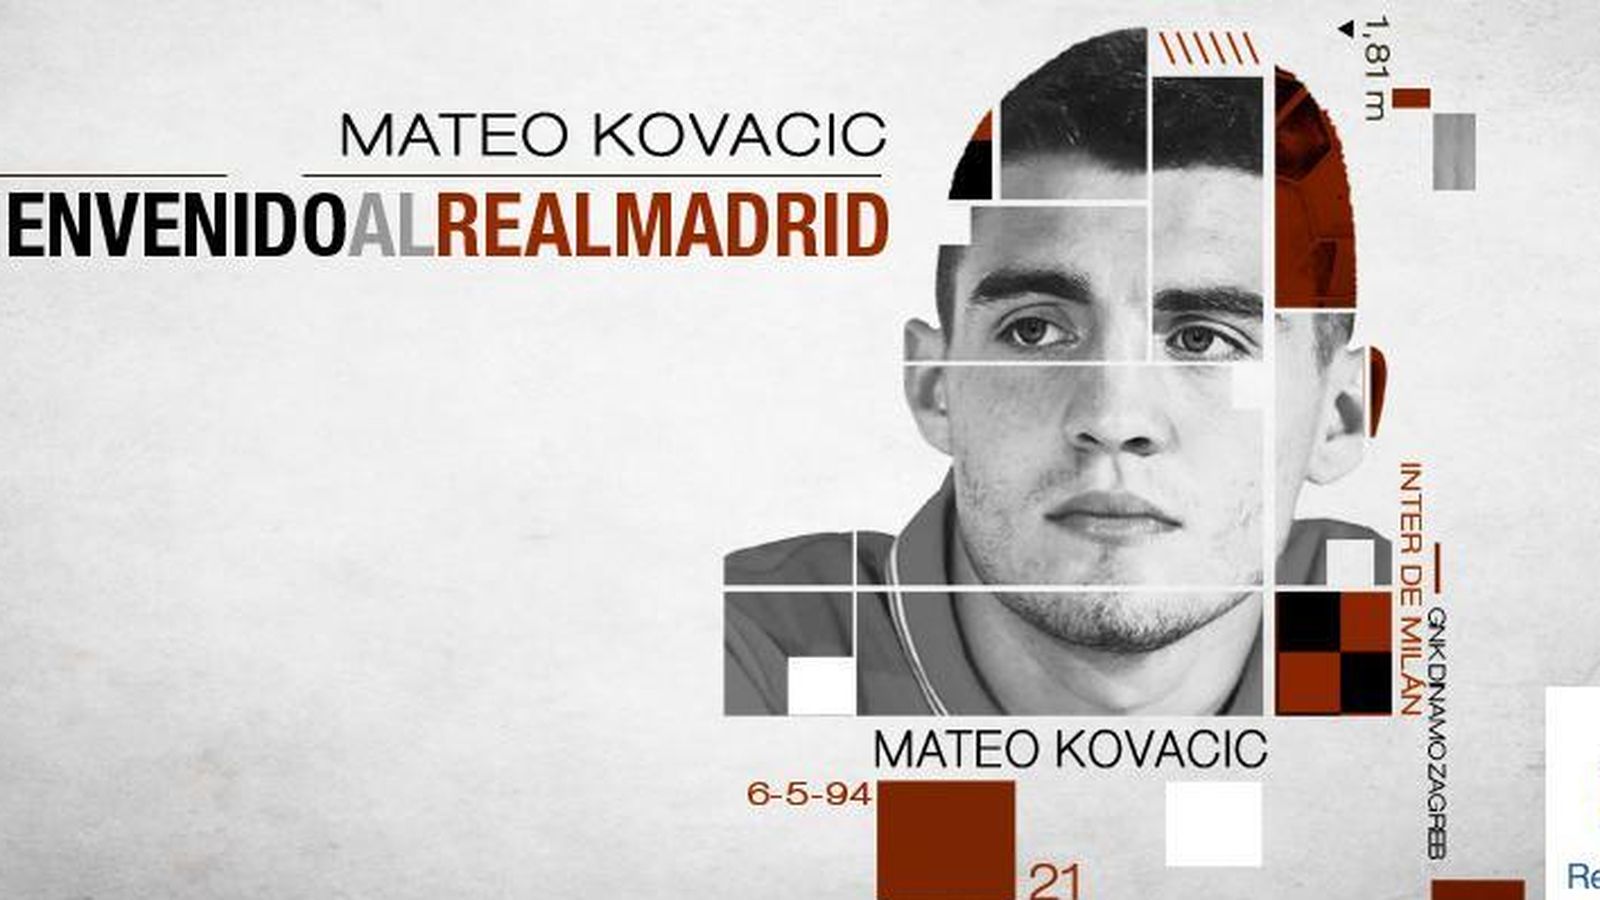 Foto: Mateo Kovacic ya es nuevo jugador del Real Madrid.